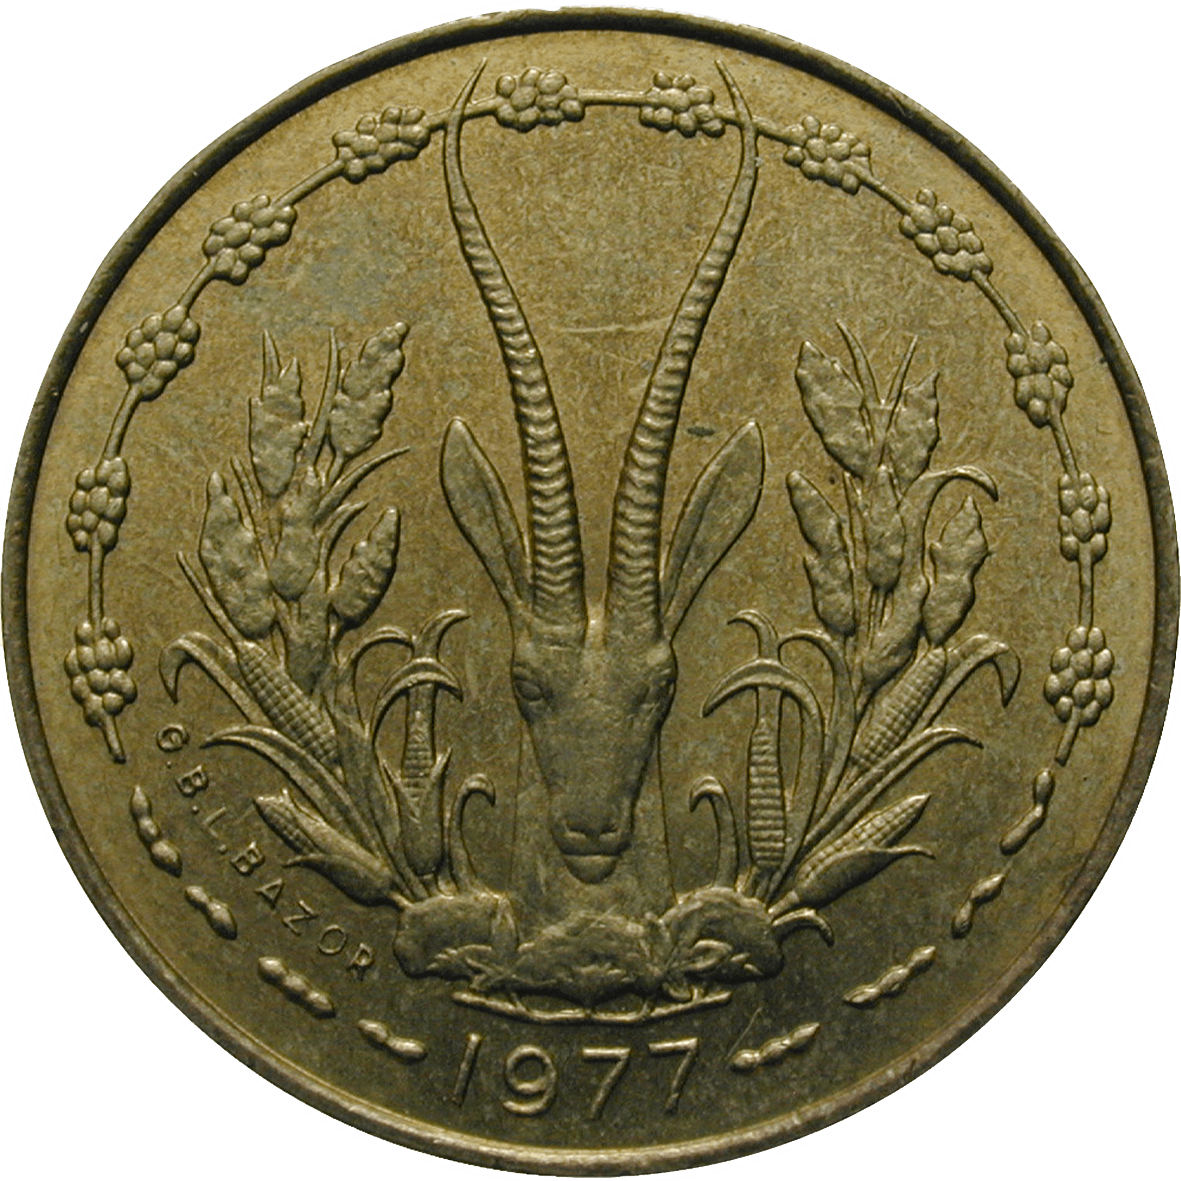 West African Monetary Union, 5 CFA Francs 1977 (reverse)